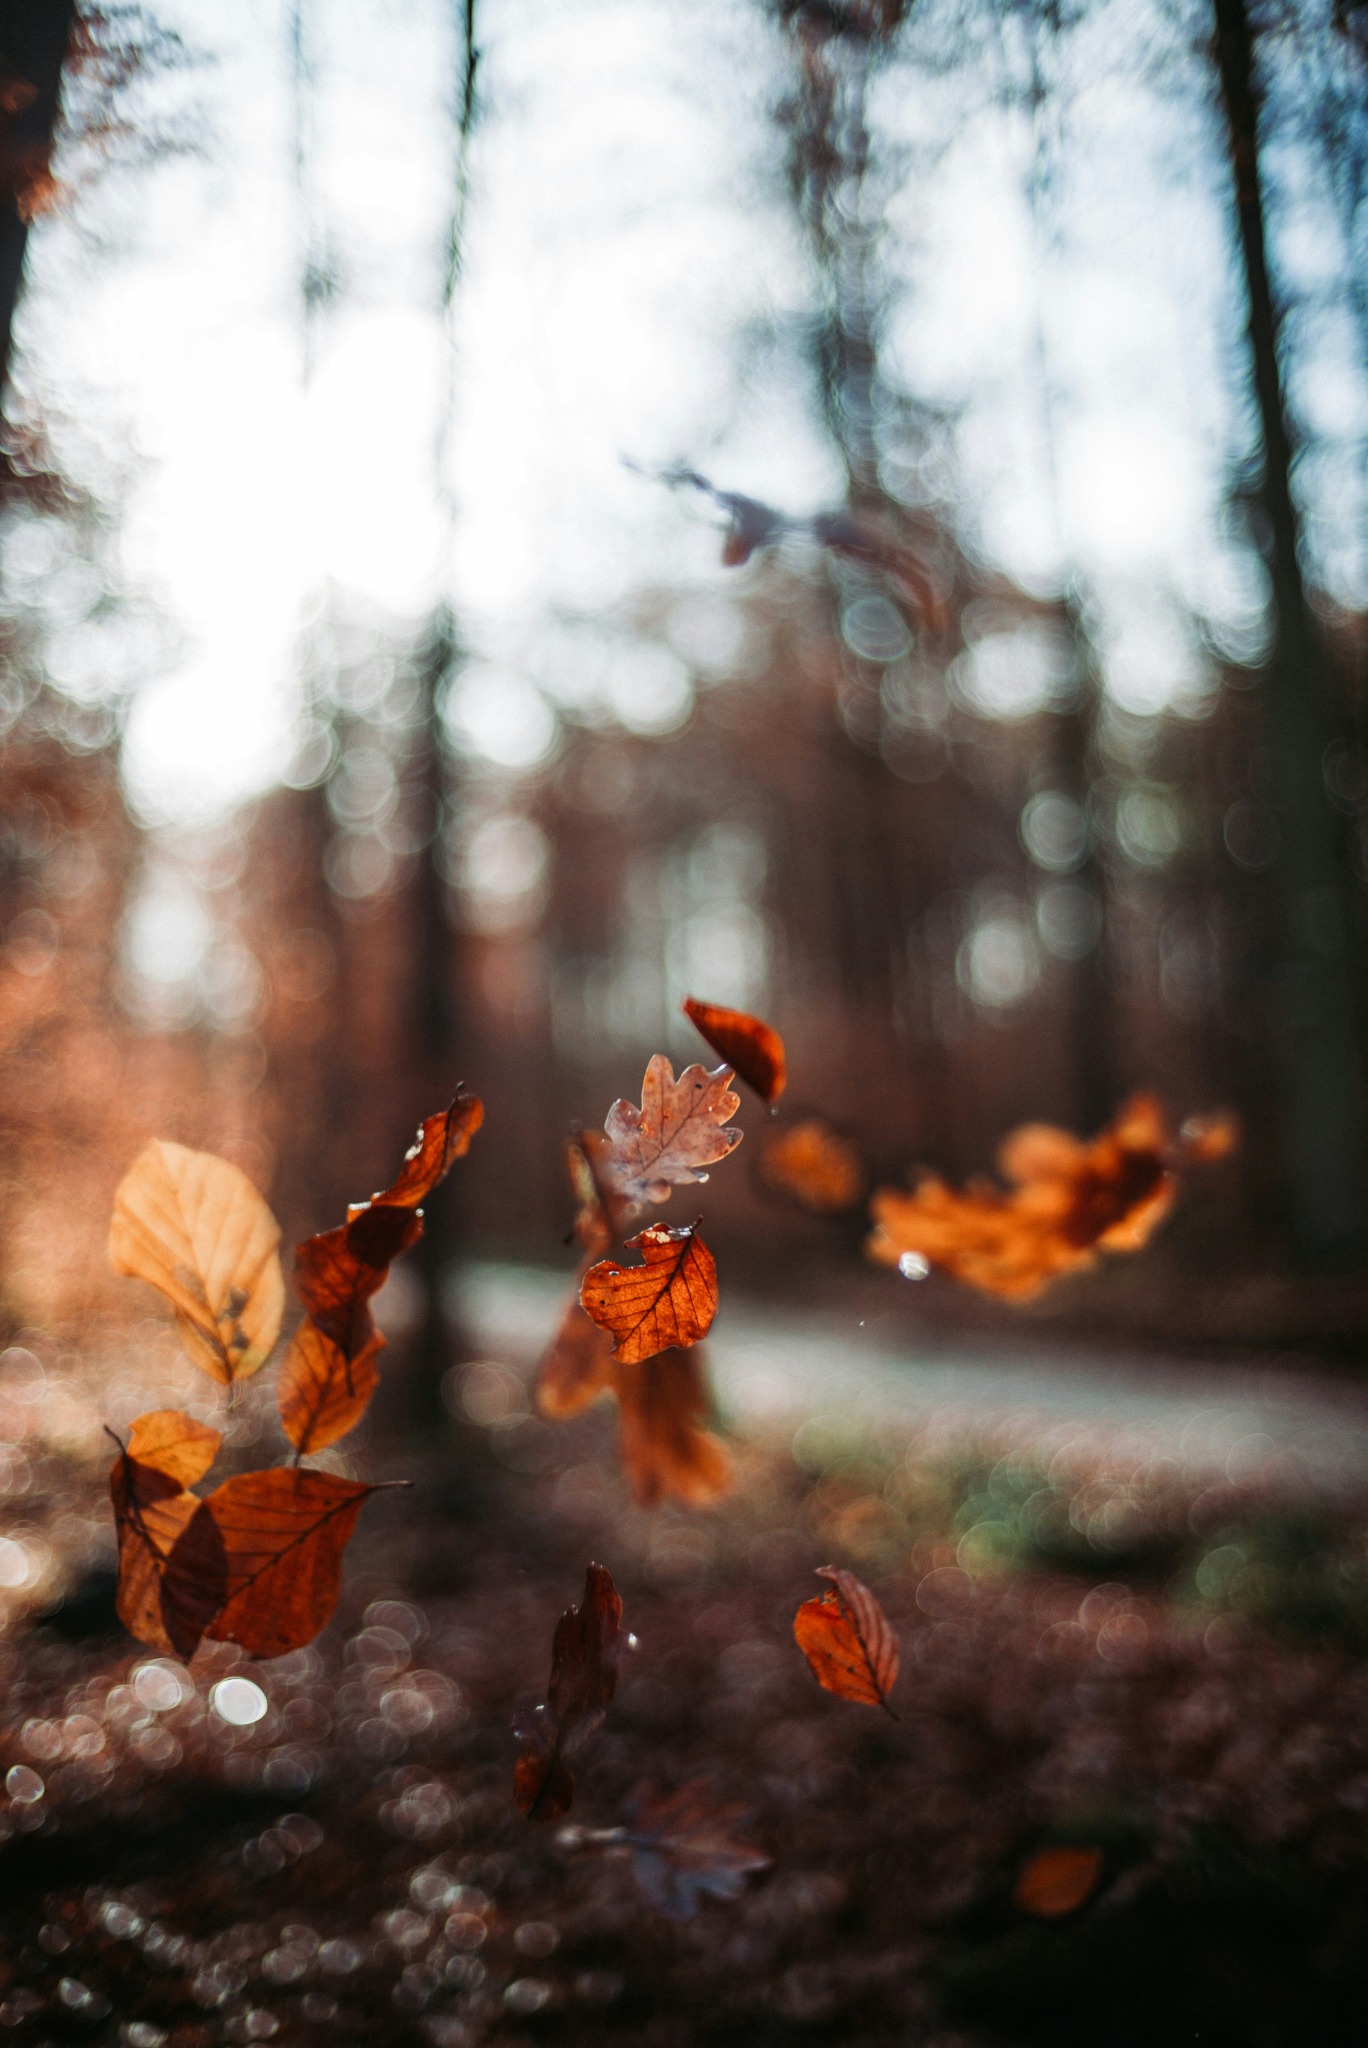 Falling leaves blur